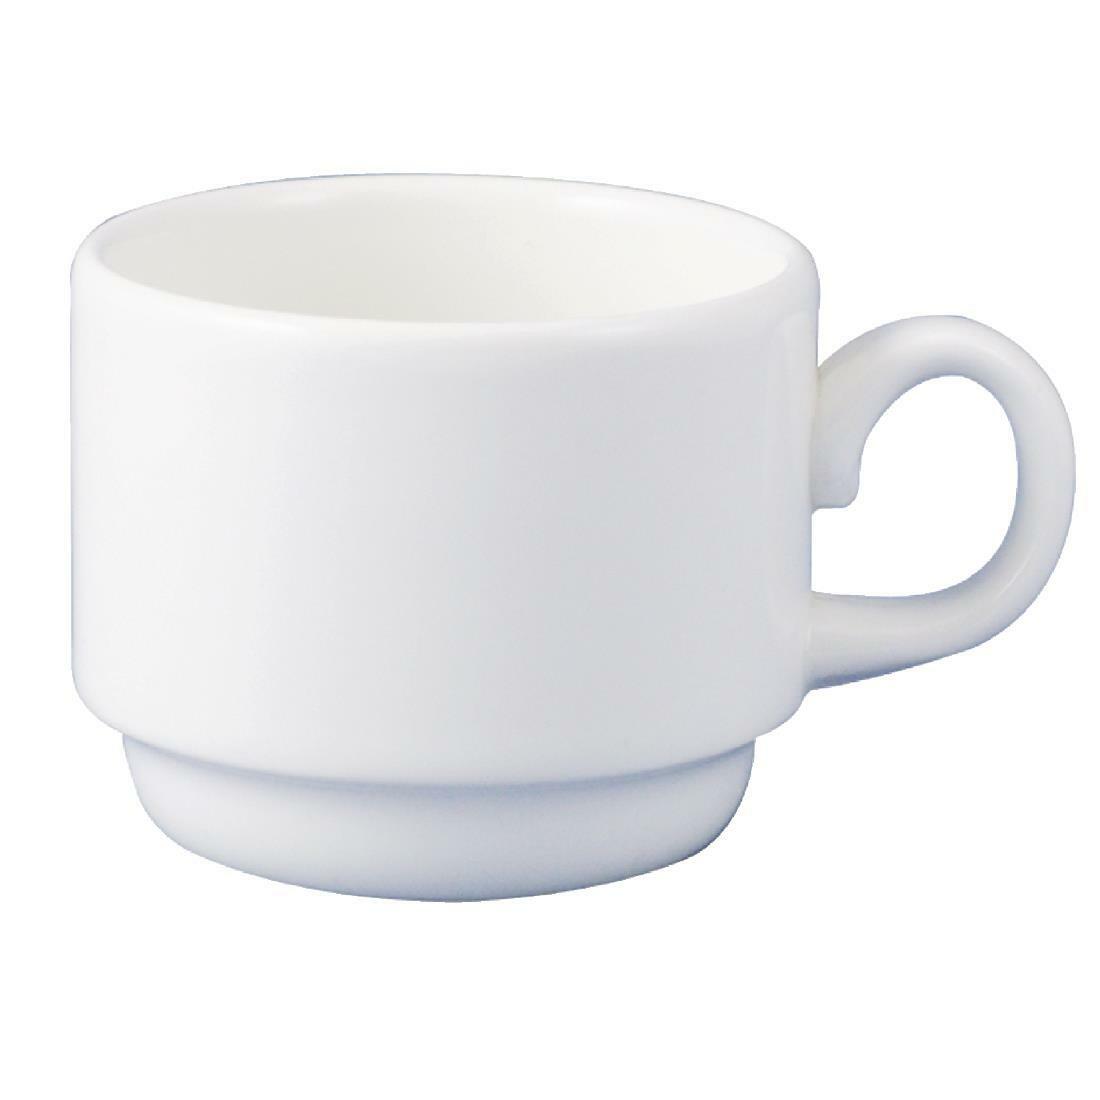 Rubbermaid Sistema Travel Soup Mug, 2.8 Cup